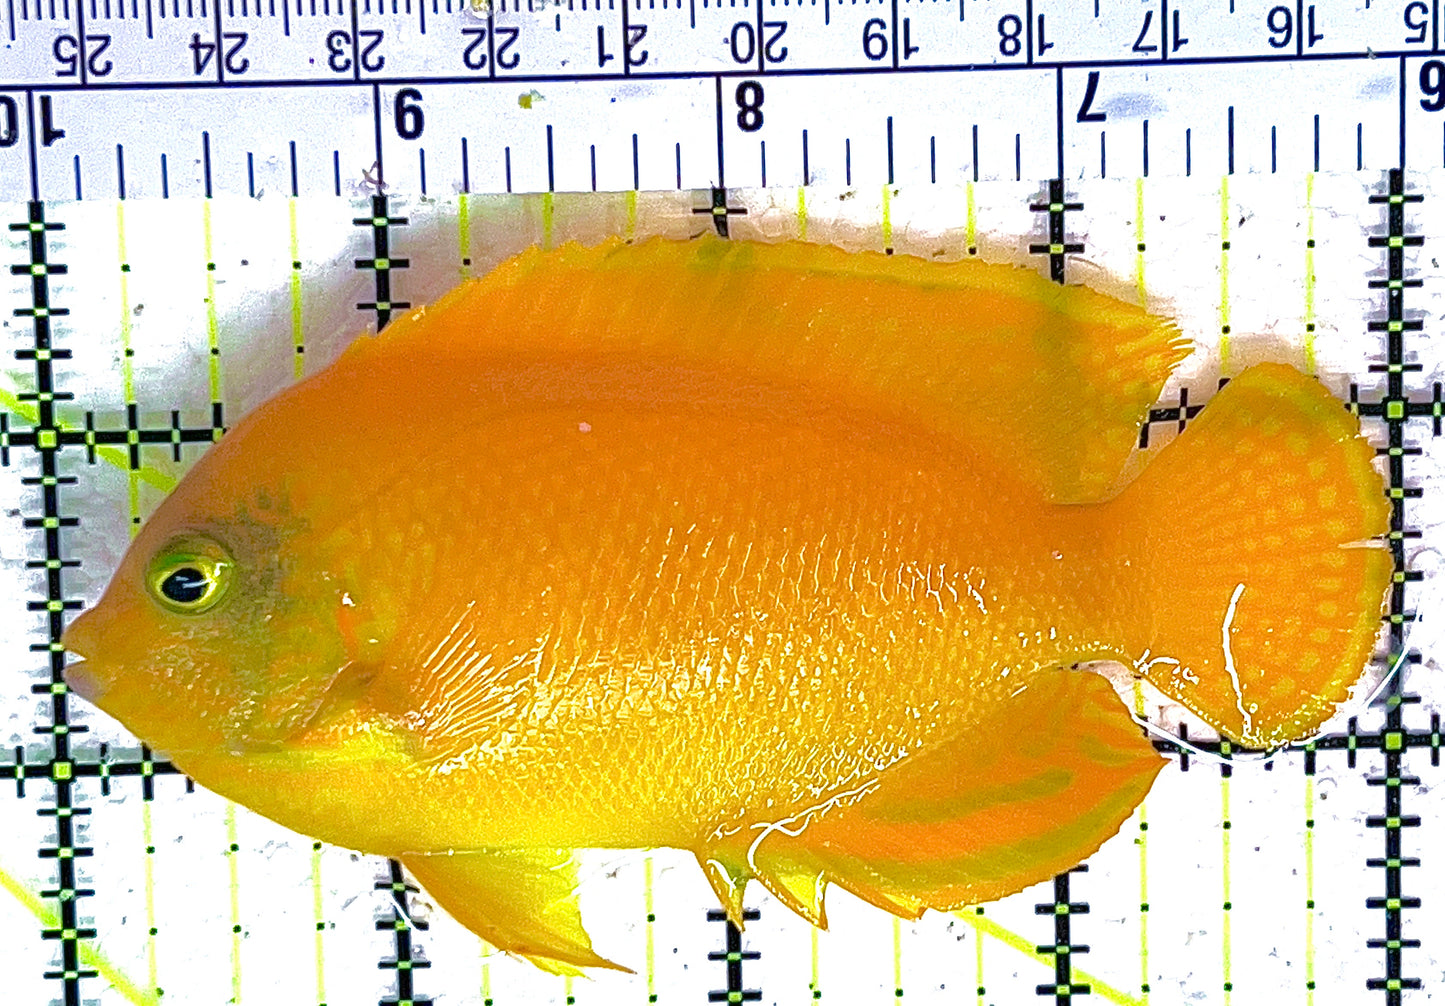 Herald's Angelfish HA042802 WYSIWYG Size: XL 4" approx